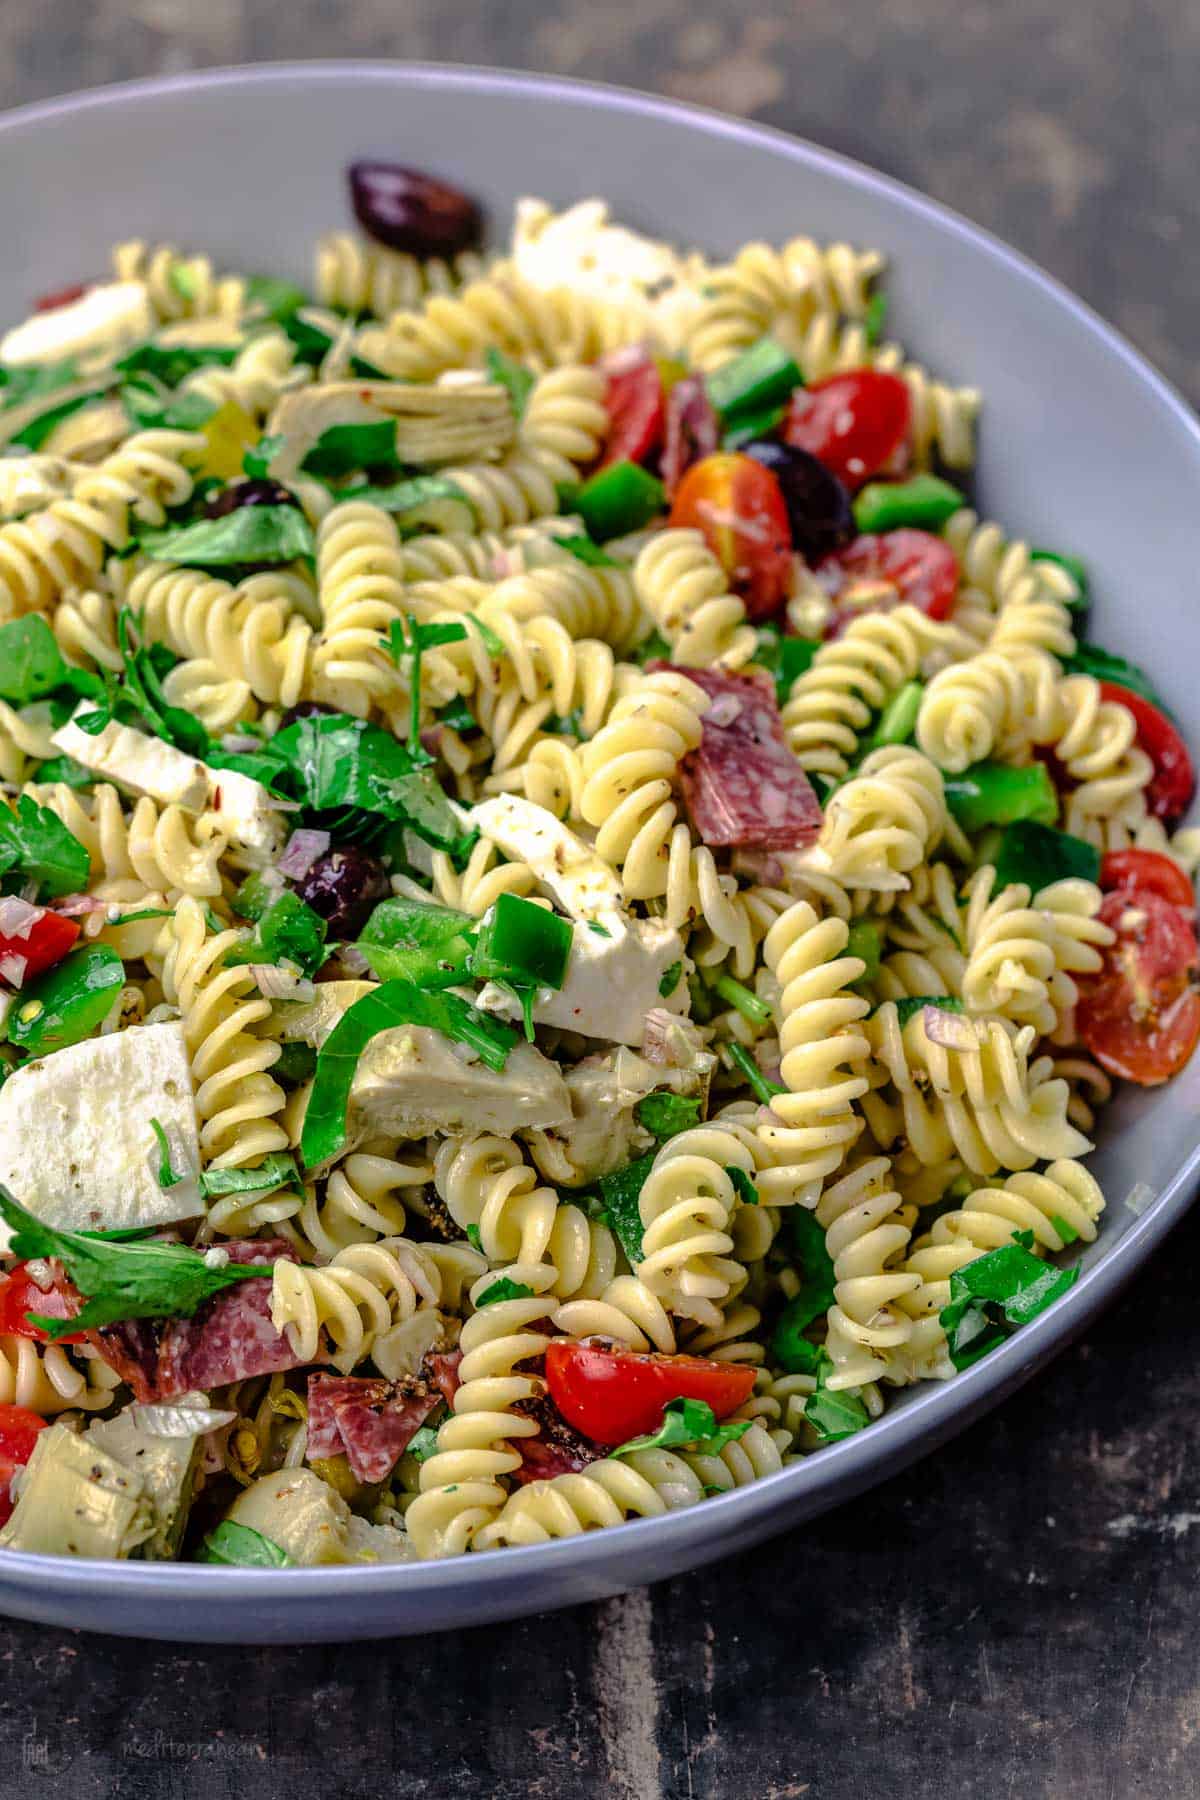 https://www.themediterraneandish.com/wp-content/uploads/2021/02/Italian-pasta-salad-recipe-5.jpg